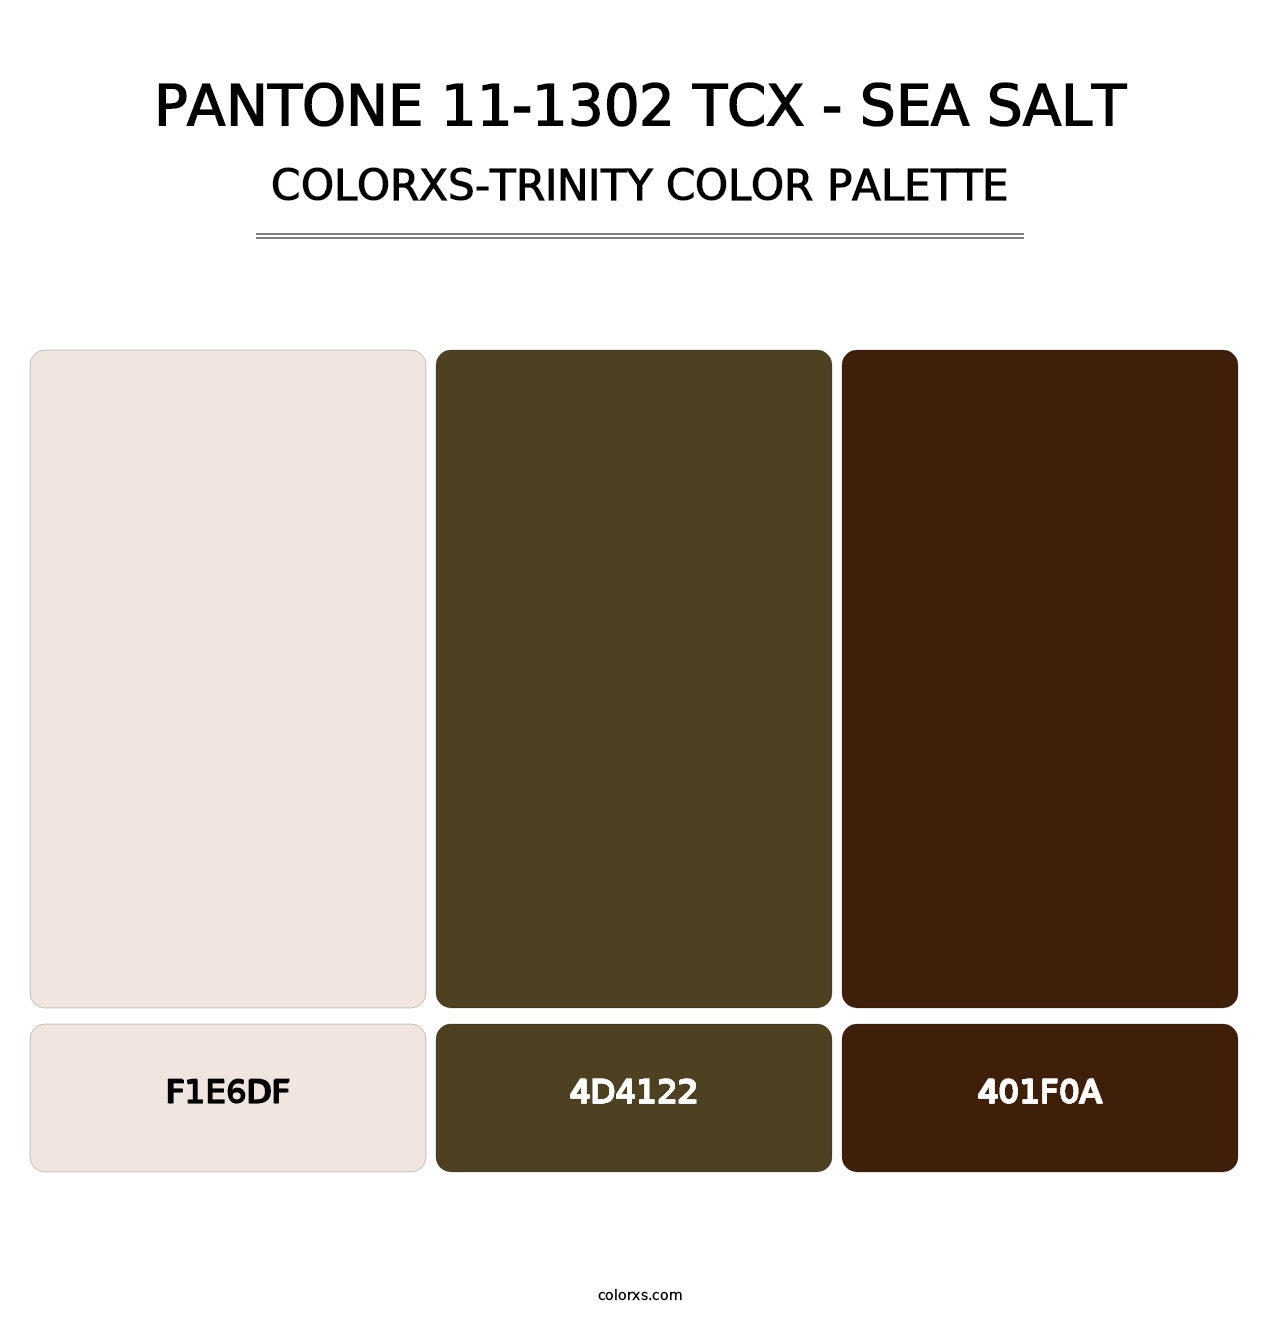 PANTONE 11-1302 TCX - Sea Salt - Colorxs Trinity Palette